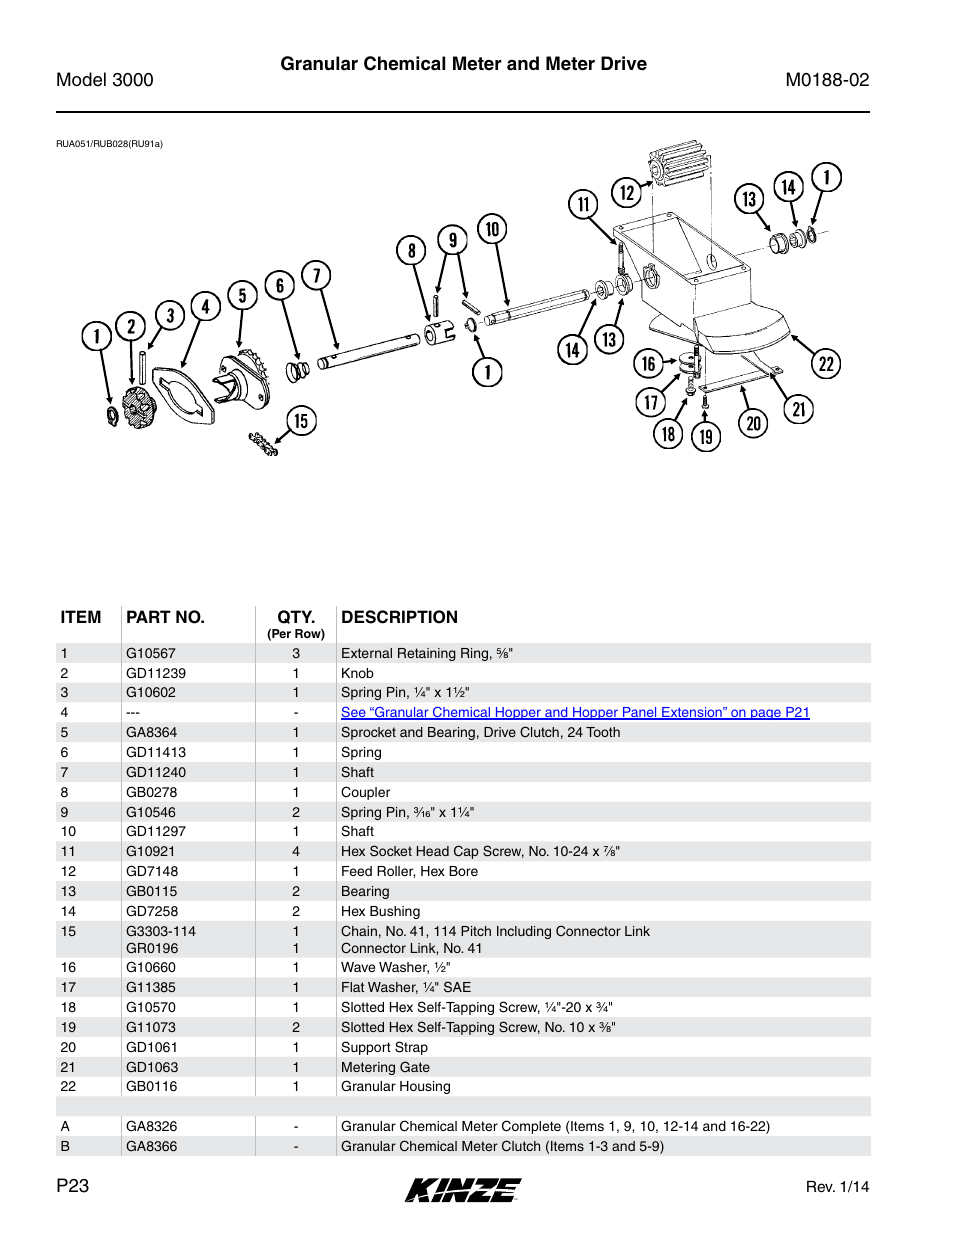 Granular chemical meter and meter drive | Kinze 3000 Rigid Frame Planter Rev. 5/14 User Manual | Page 26 / 154